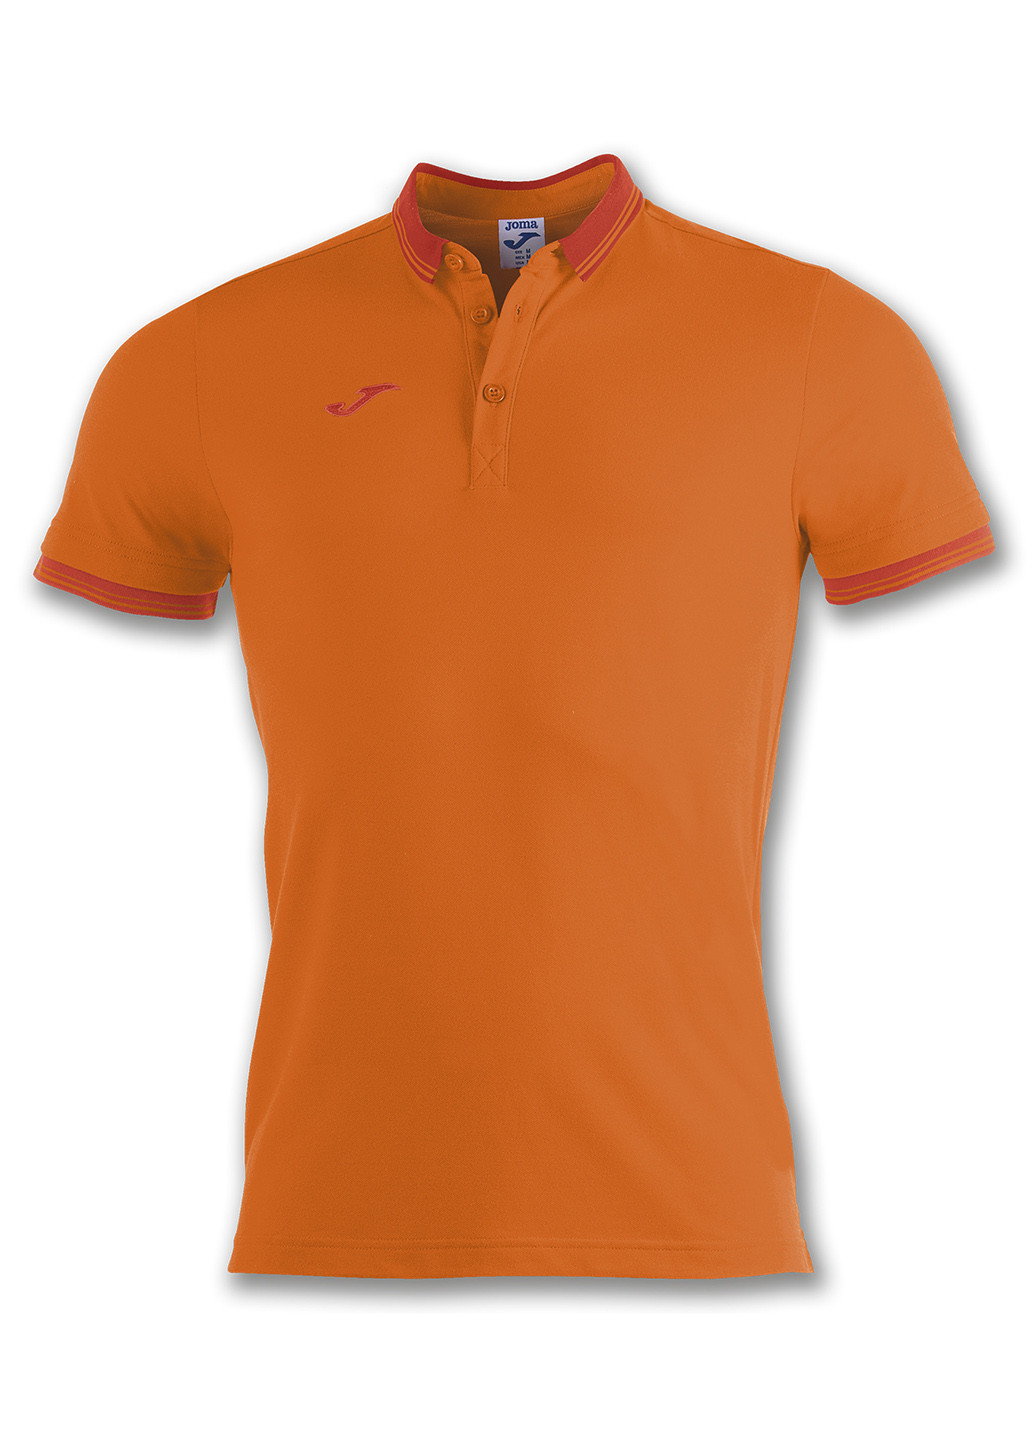 Оранжевая футболка-поло для мужчин Joma с логотипом